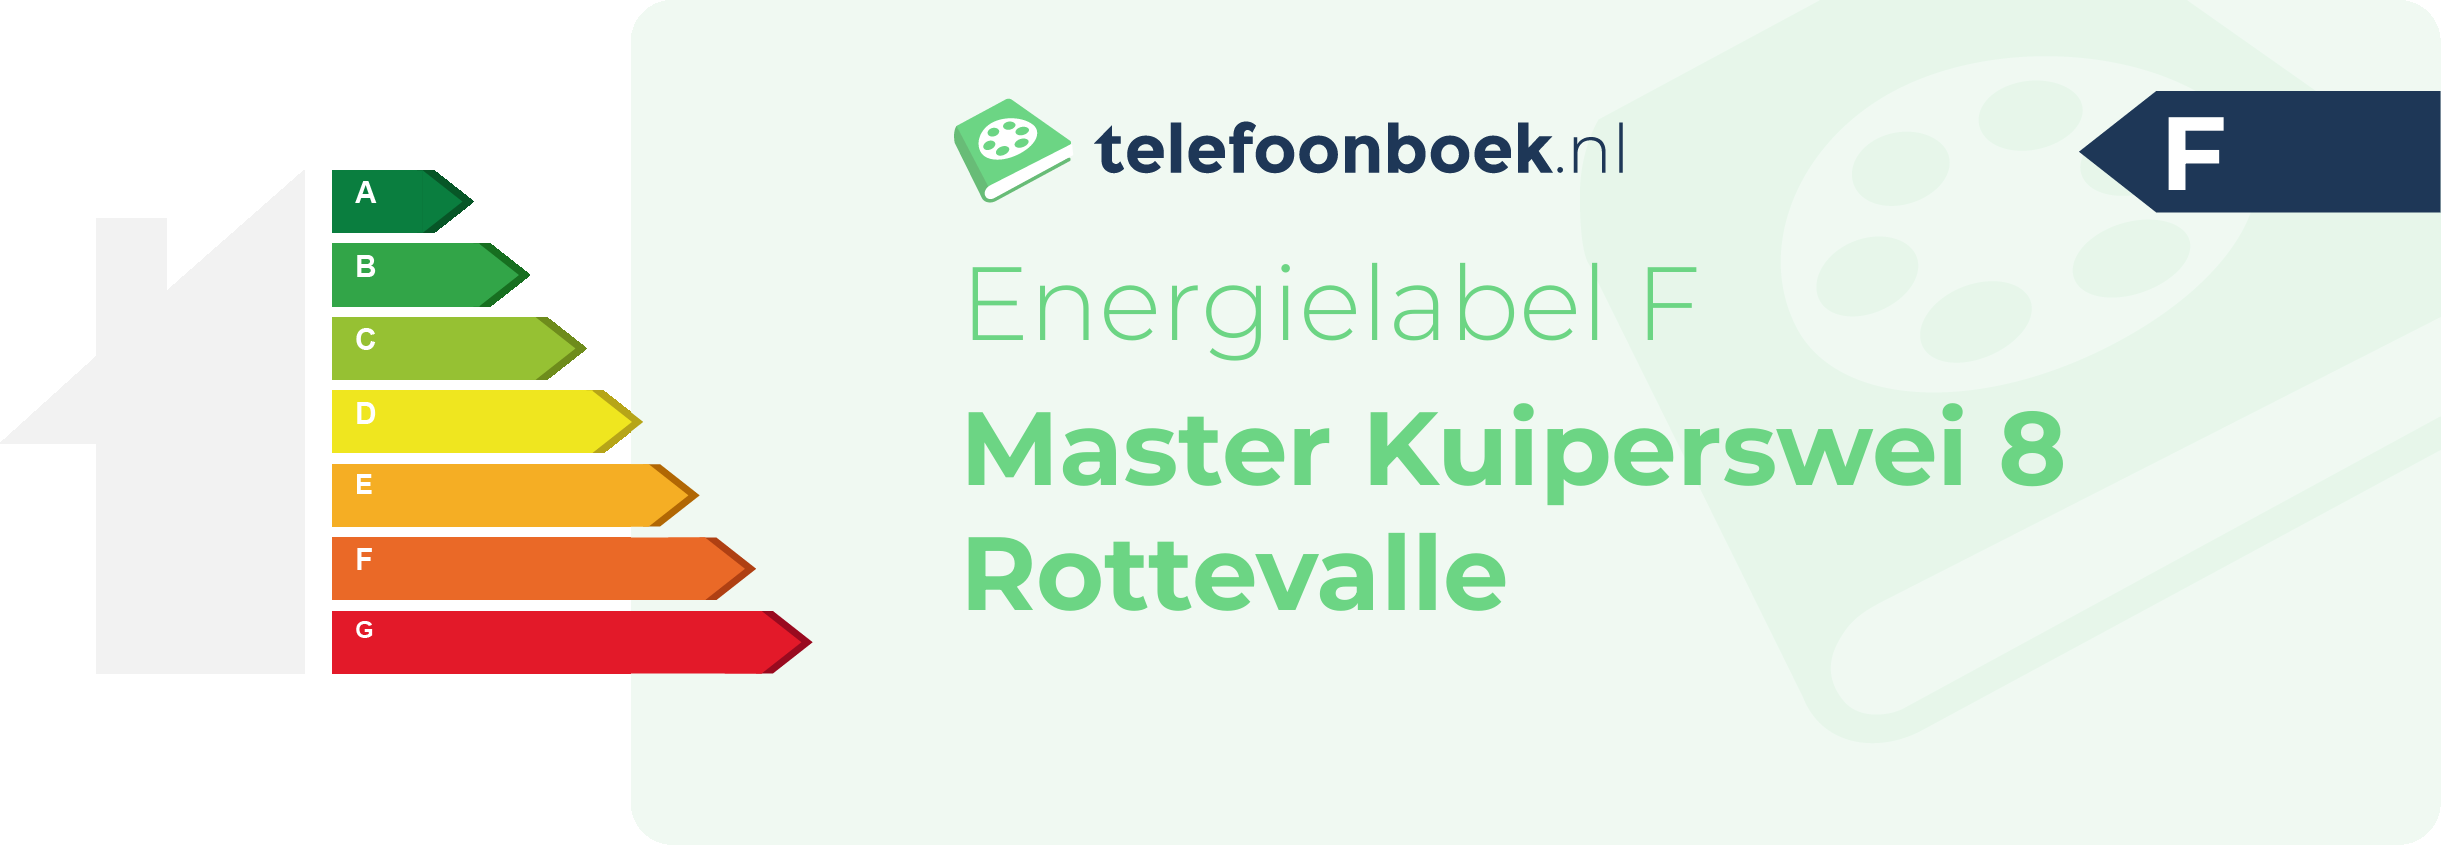 Energielabel Master Kuiperswei 8 Rottevalle